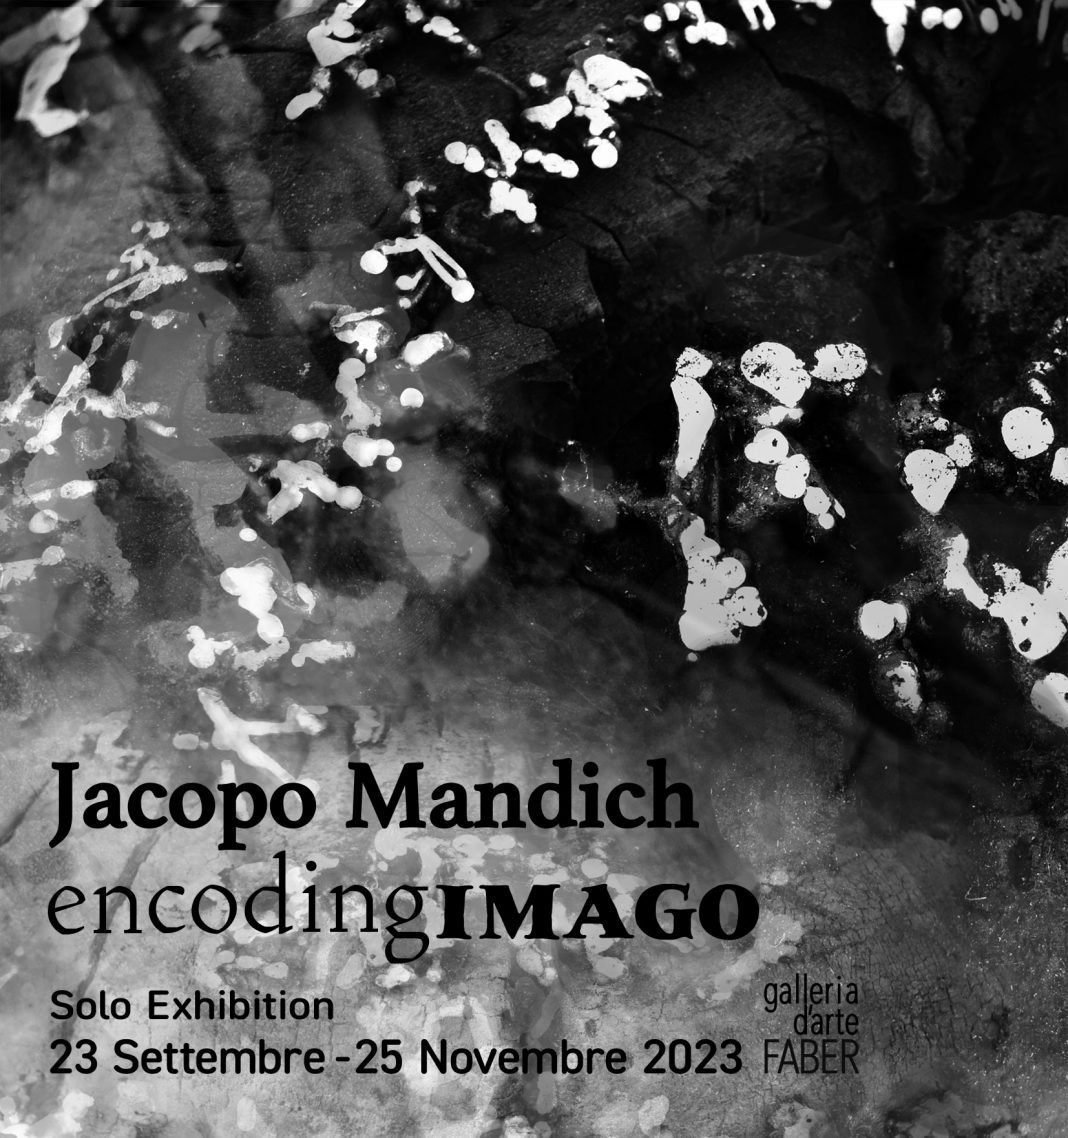 Jacopo Mandich – enconding IMAGOhttps://www.exibart.com/repository/media/formidable/11/img/42c/IMAGO-locandina-web-1068x1138.jpg